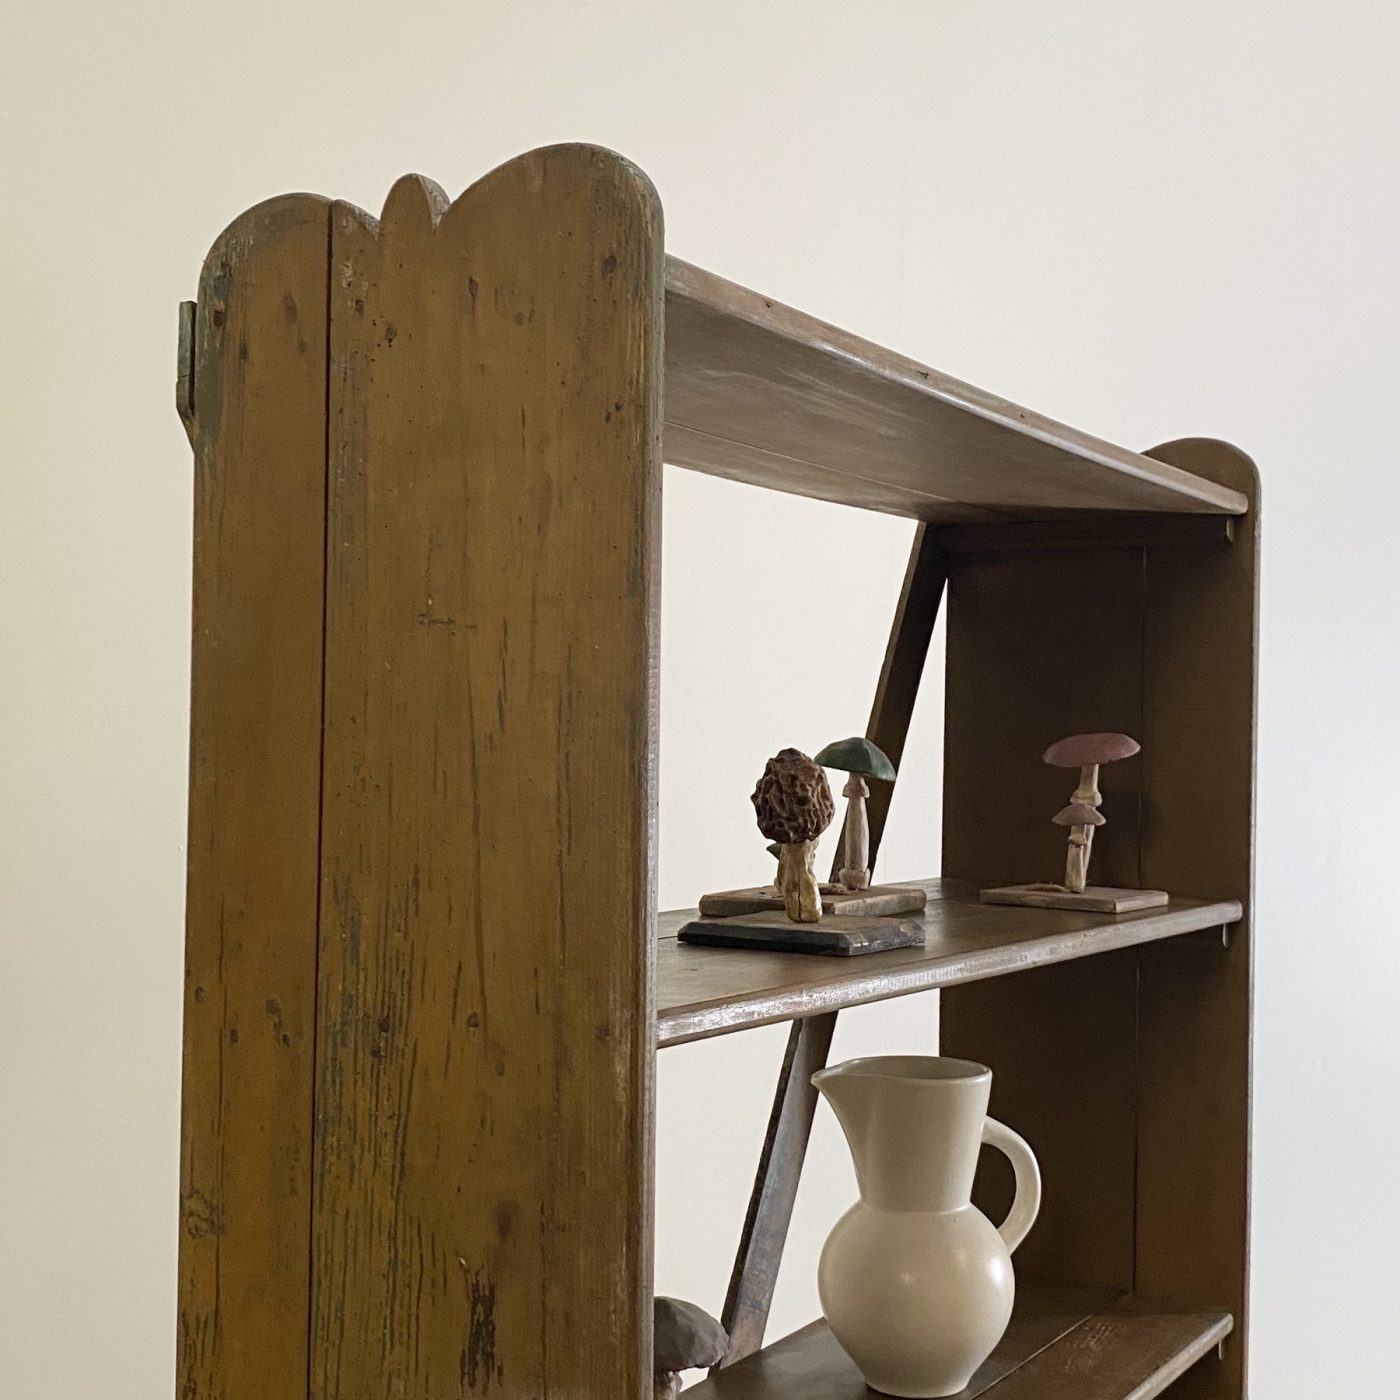 objet-vagabond-wooden-shelf0001